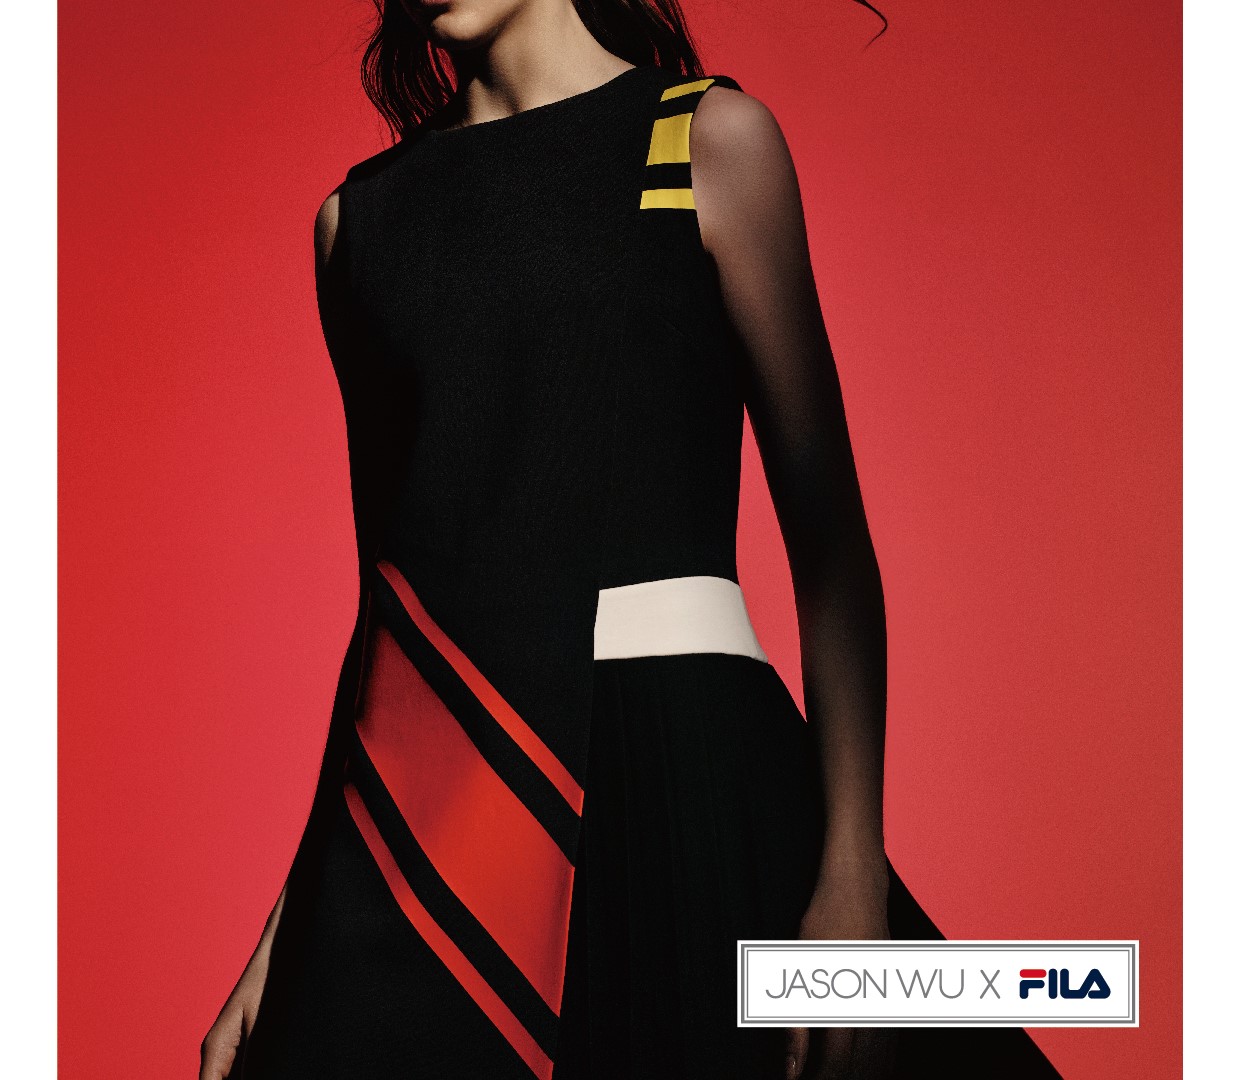 FILA x Jason Wu striped tennis dress